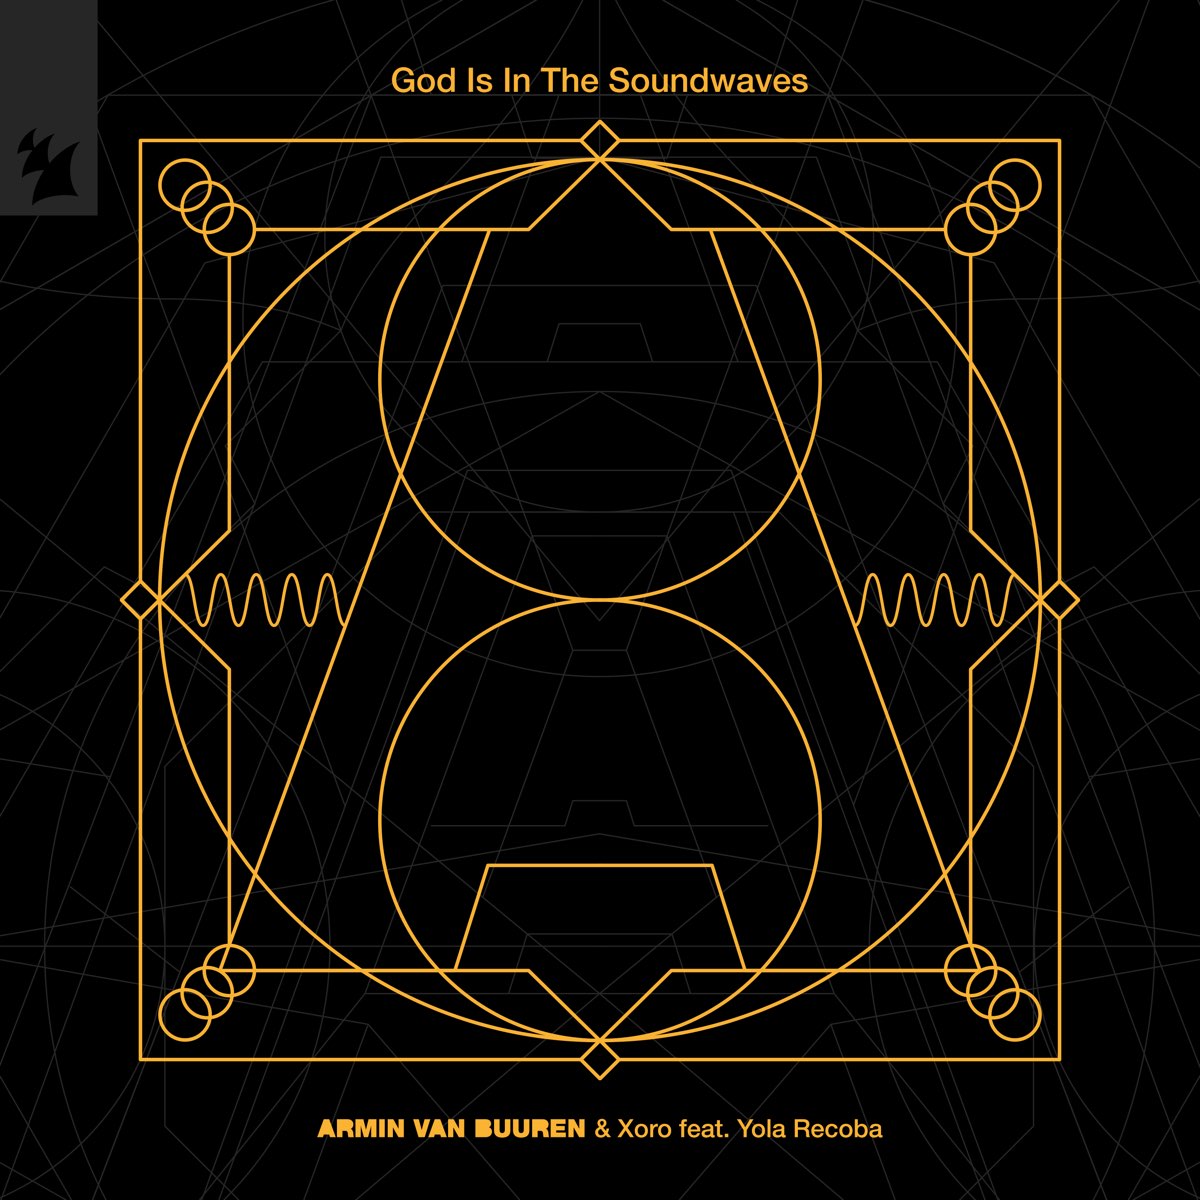 Armin van Buuren & Xoro featuring Yola Recoba — God Is In The Soundwaves cover artwork